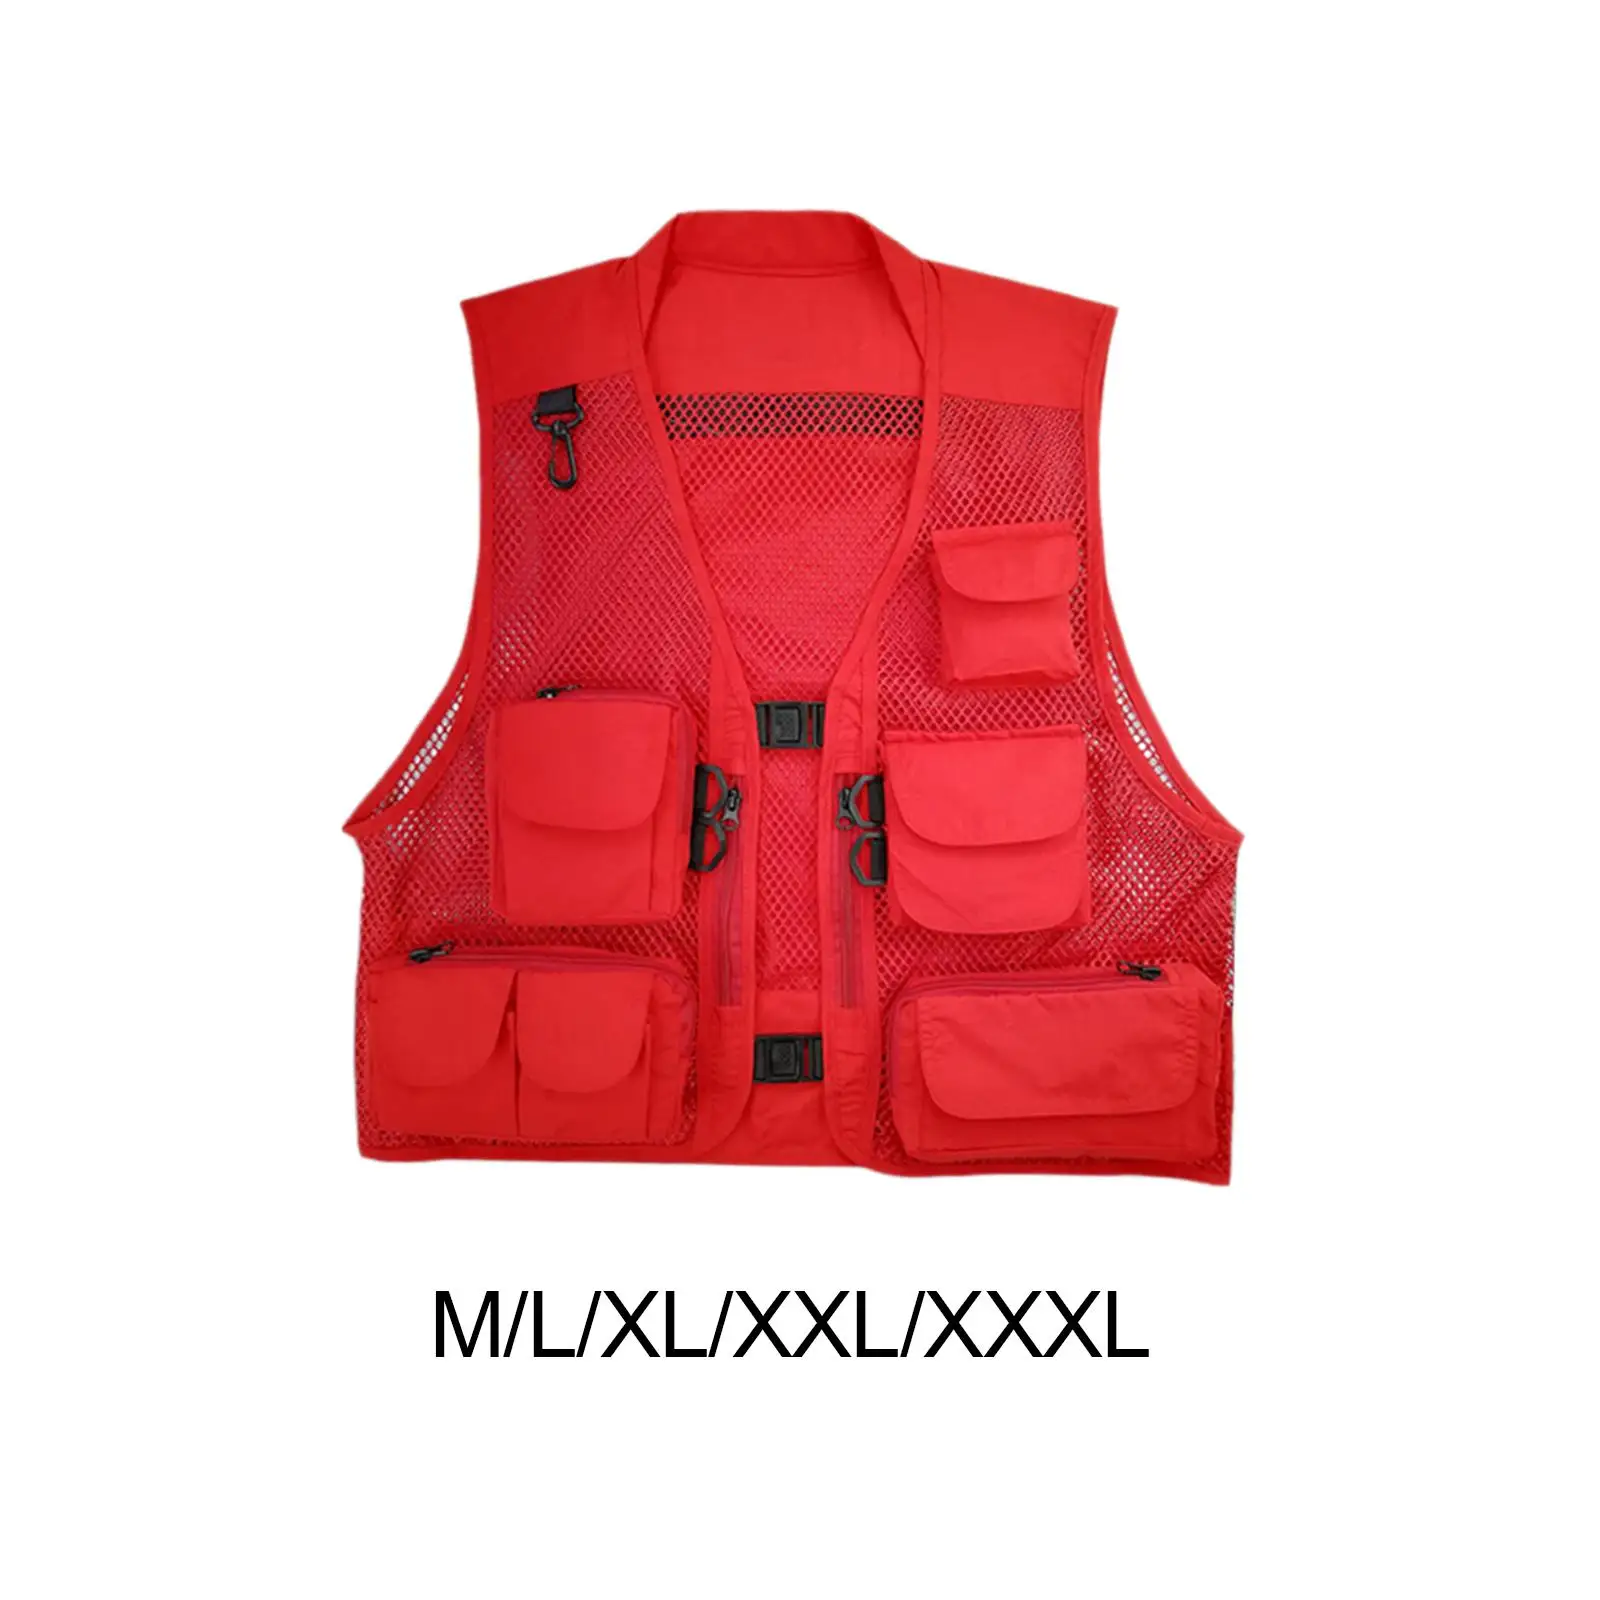 Mesh Fishing Photography Vest Multi Zipper Pockets Lightweight Convenient